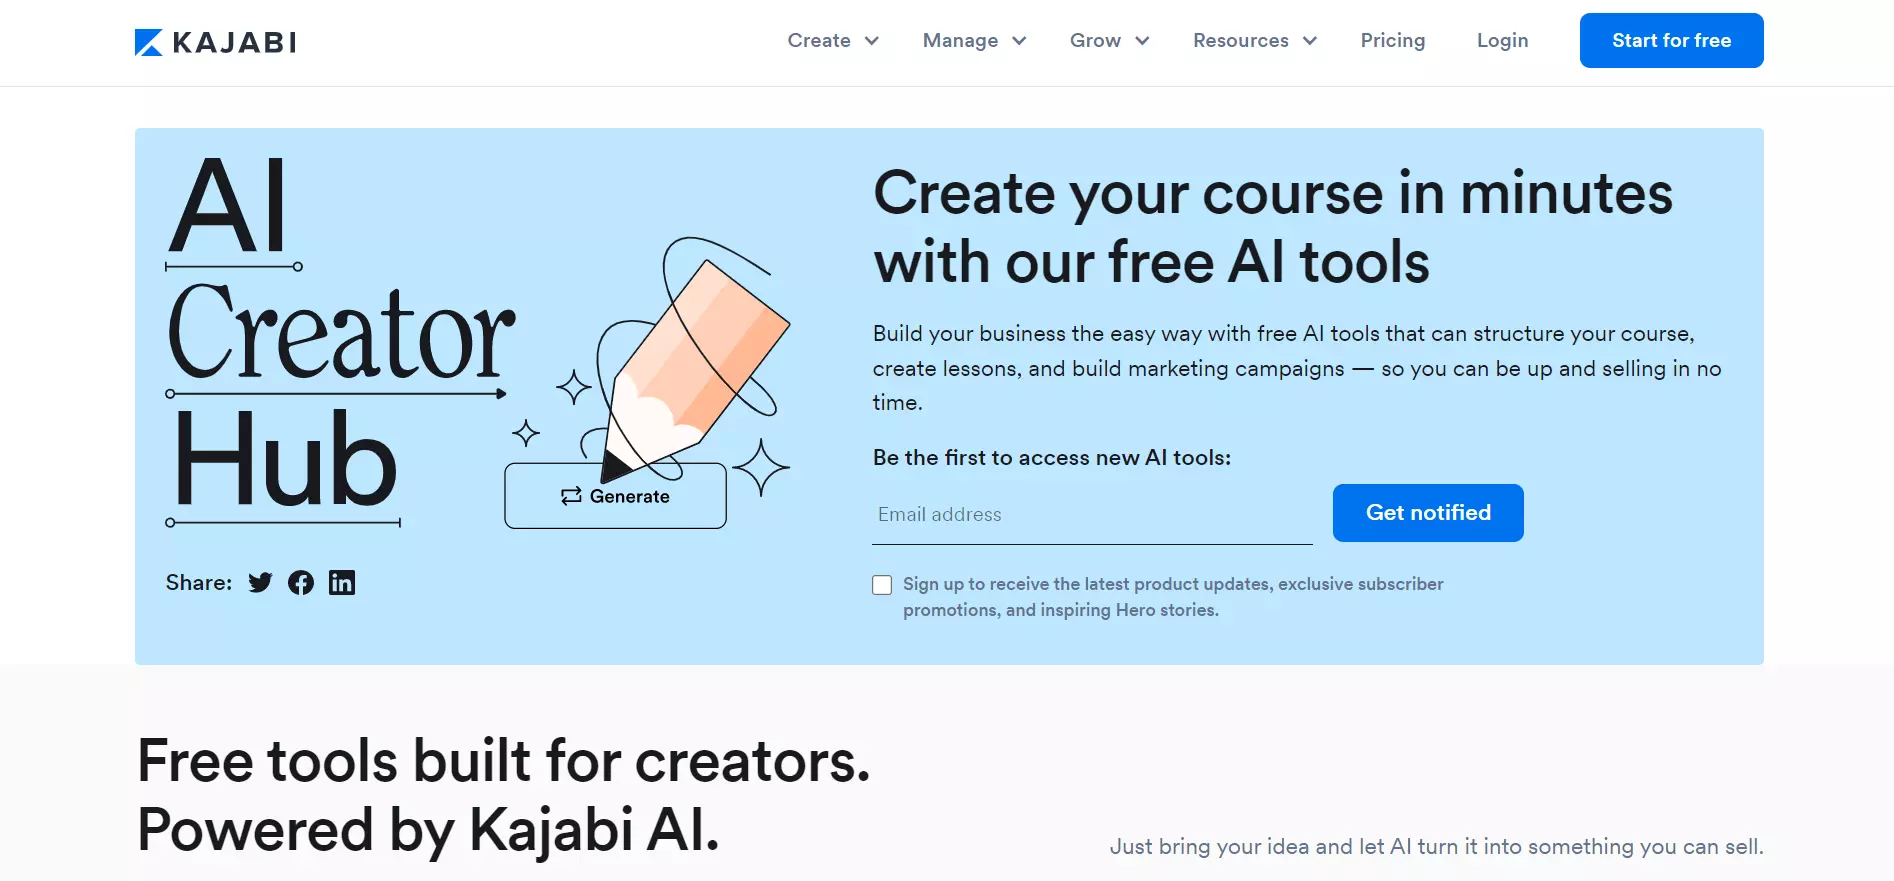 Kajabi AI creator hub